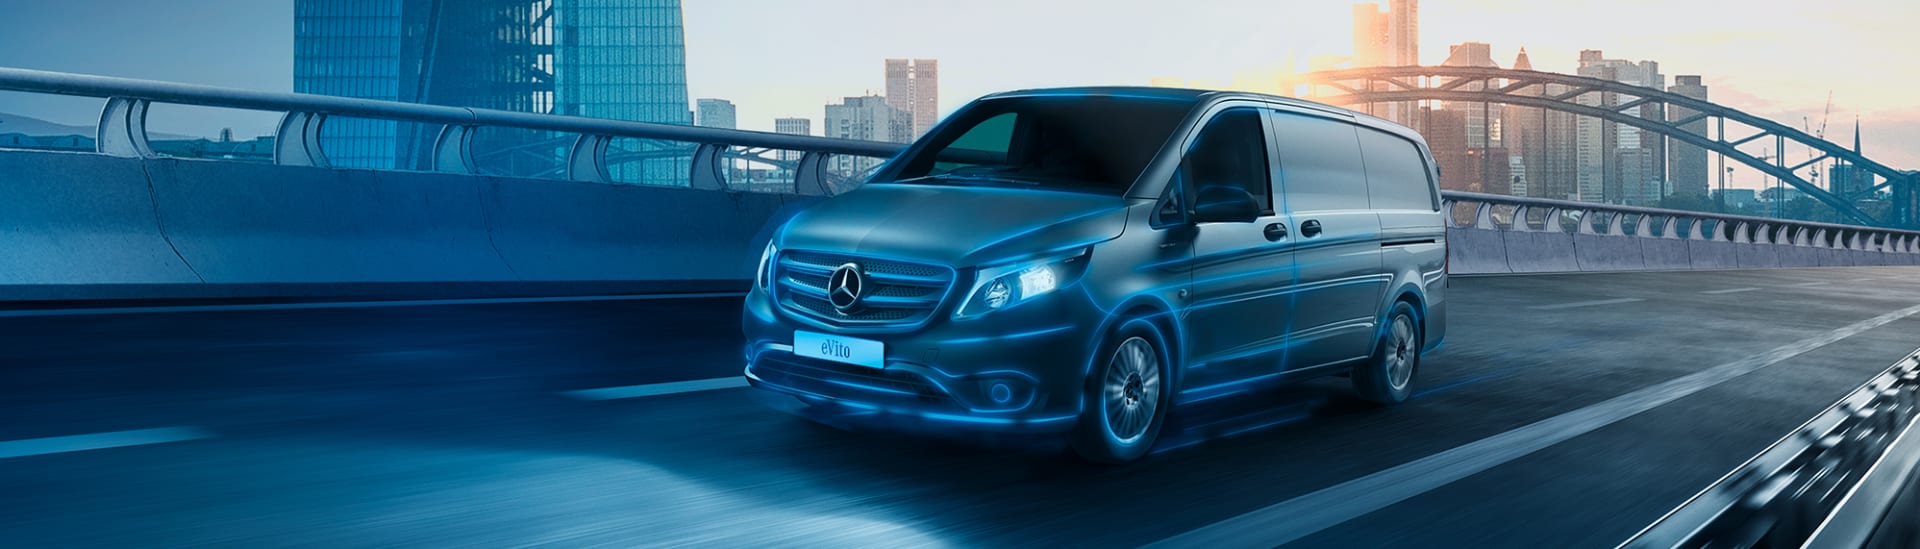 Mercedes-Benz eVito Panel Van Business Contract Hire offer